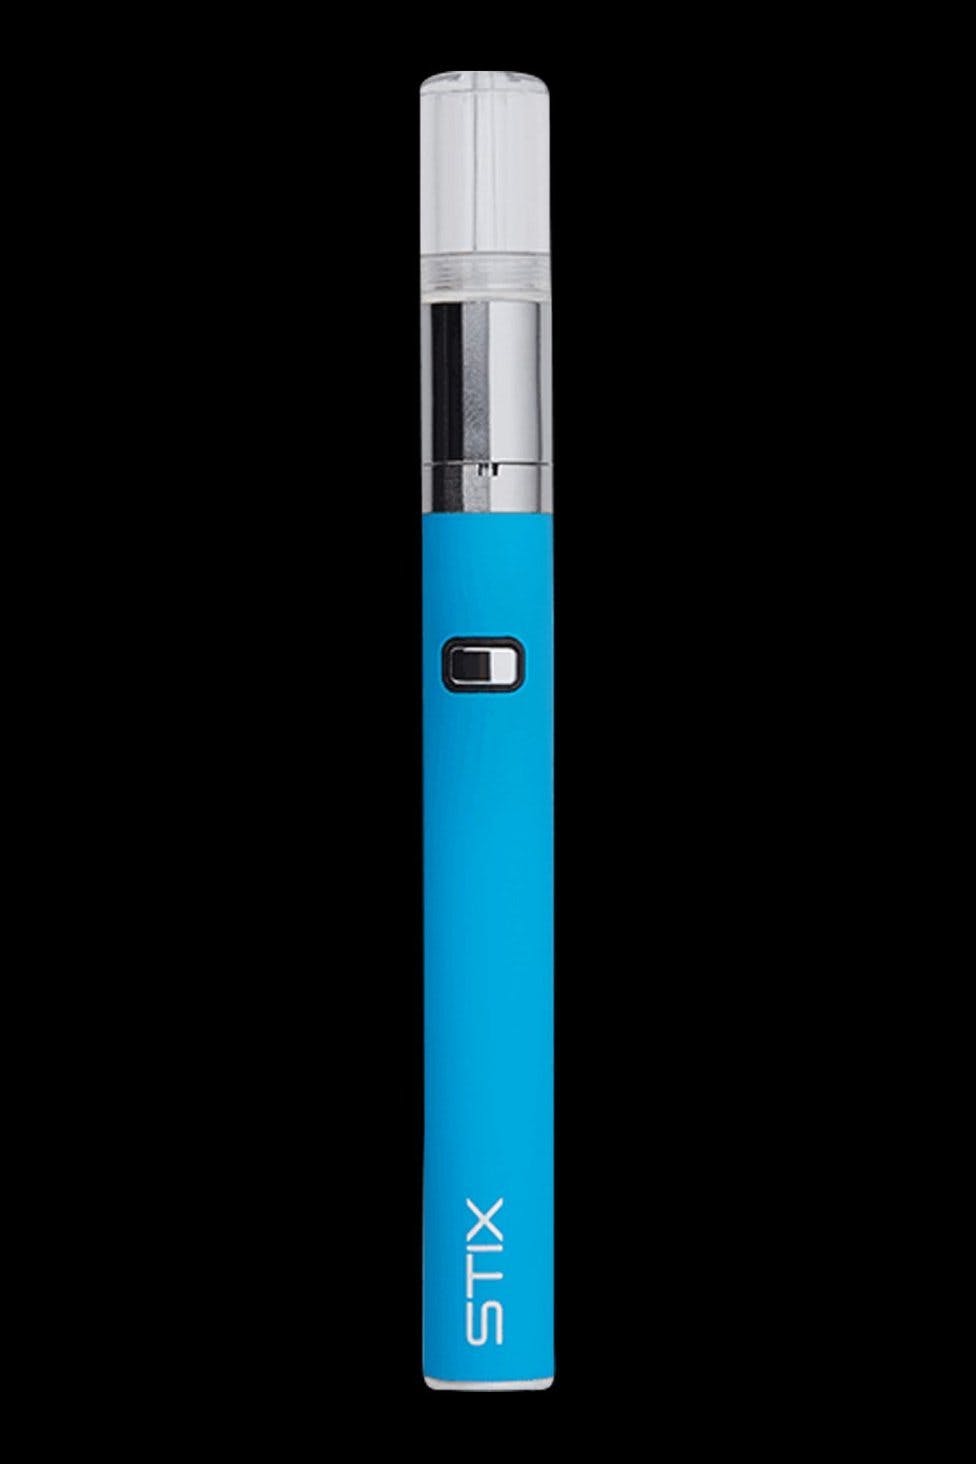 Yocan Stix Plus Vaporizer for Sale